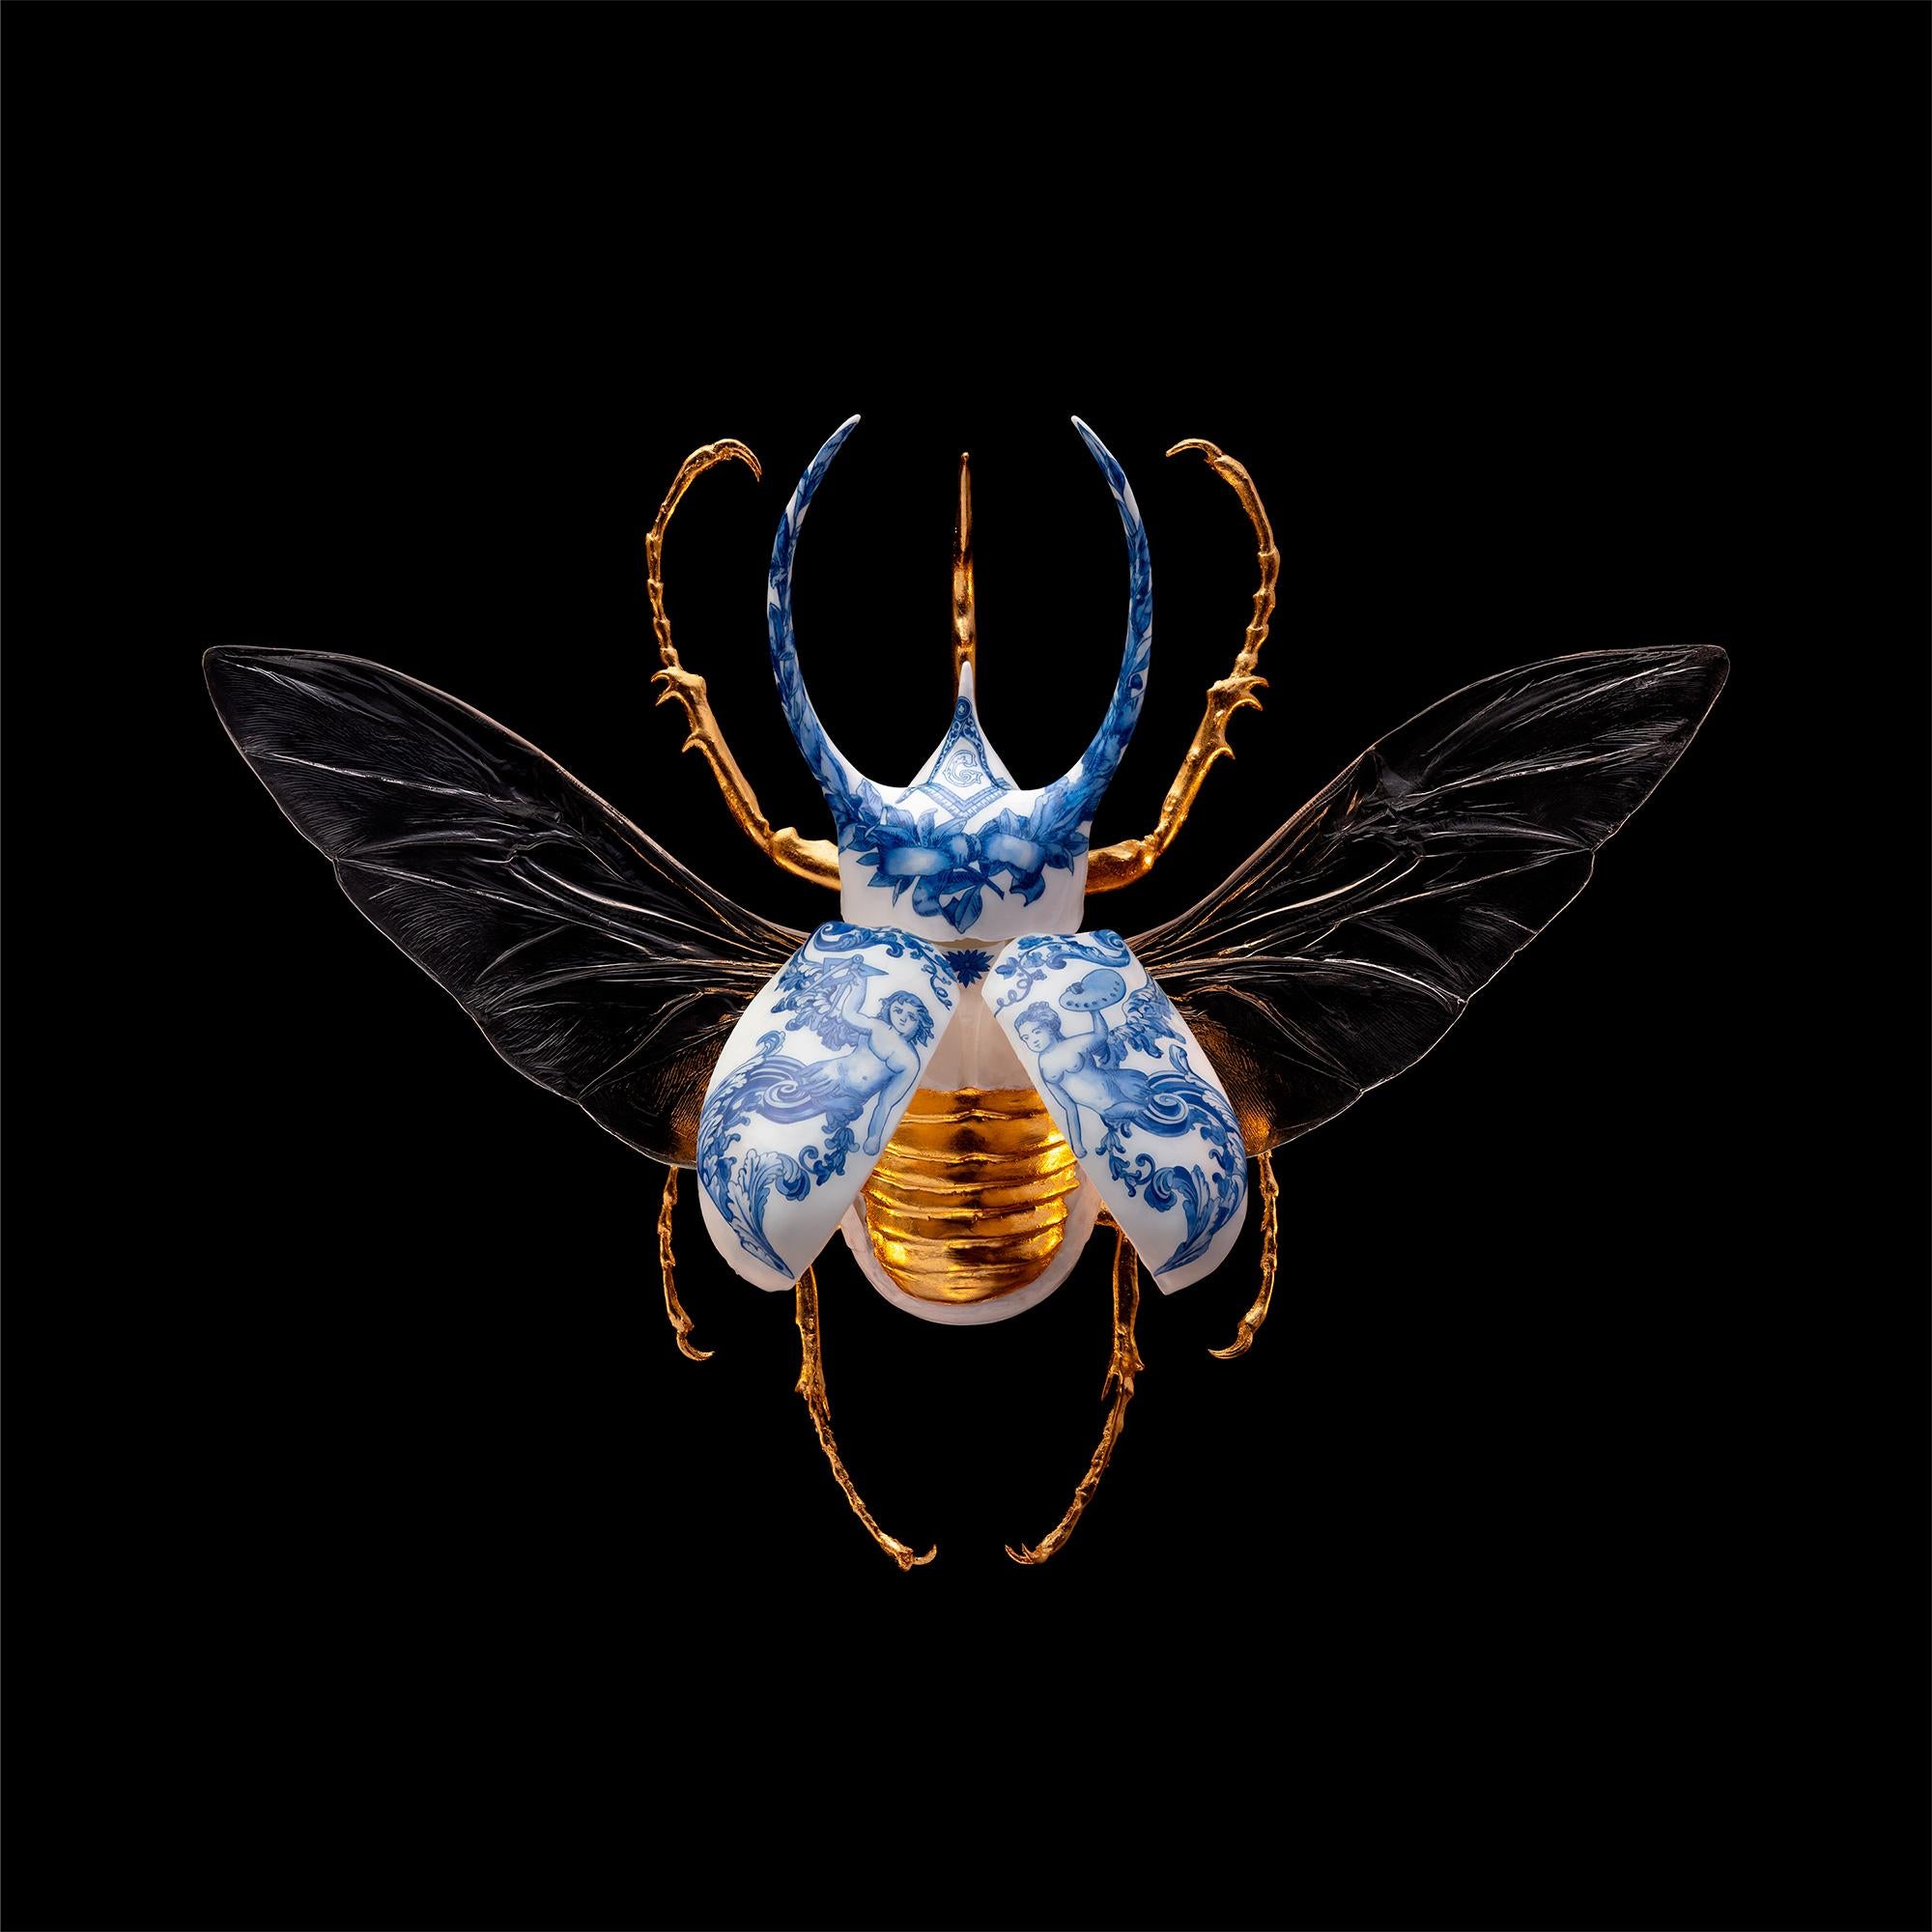 Samuel Dejong Animal Print - Atlas Beetle Open - 21st Century, Contemporary, Figurative, Print, Insect